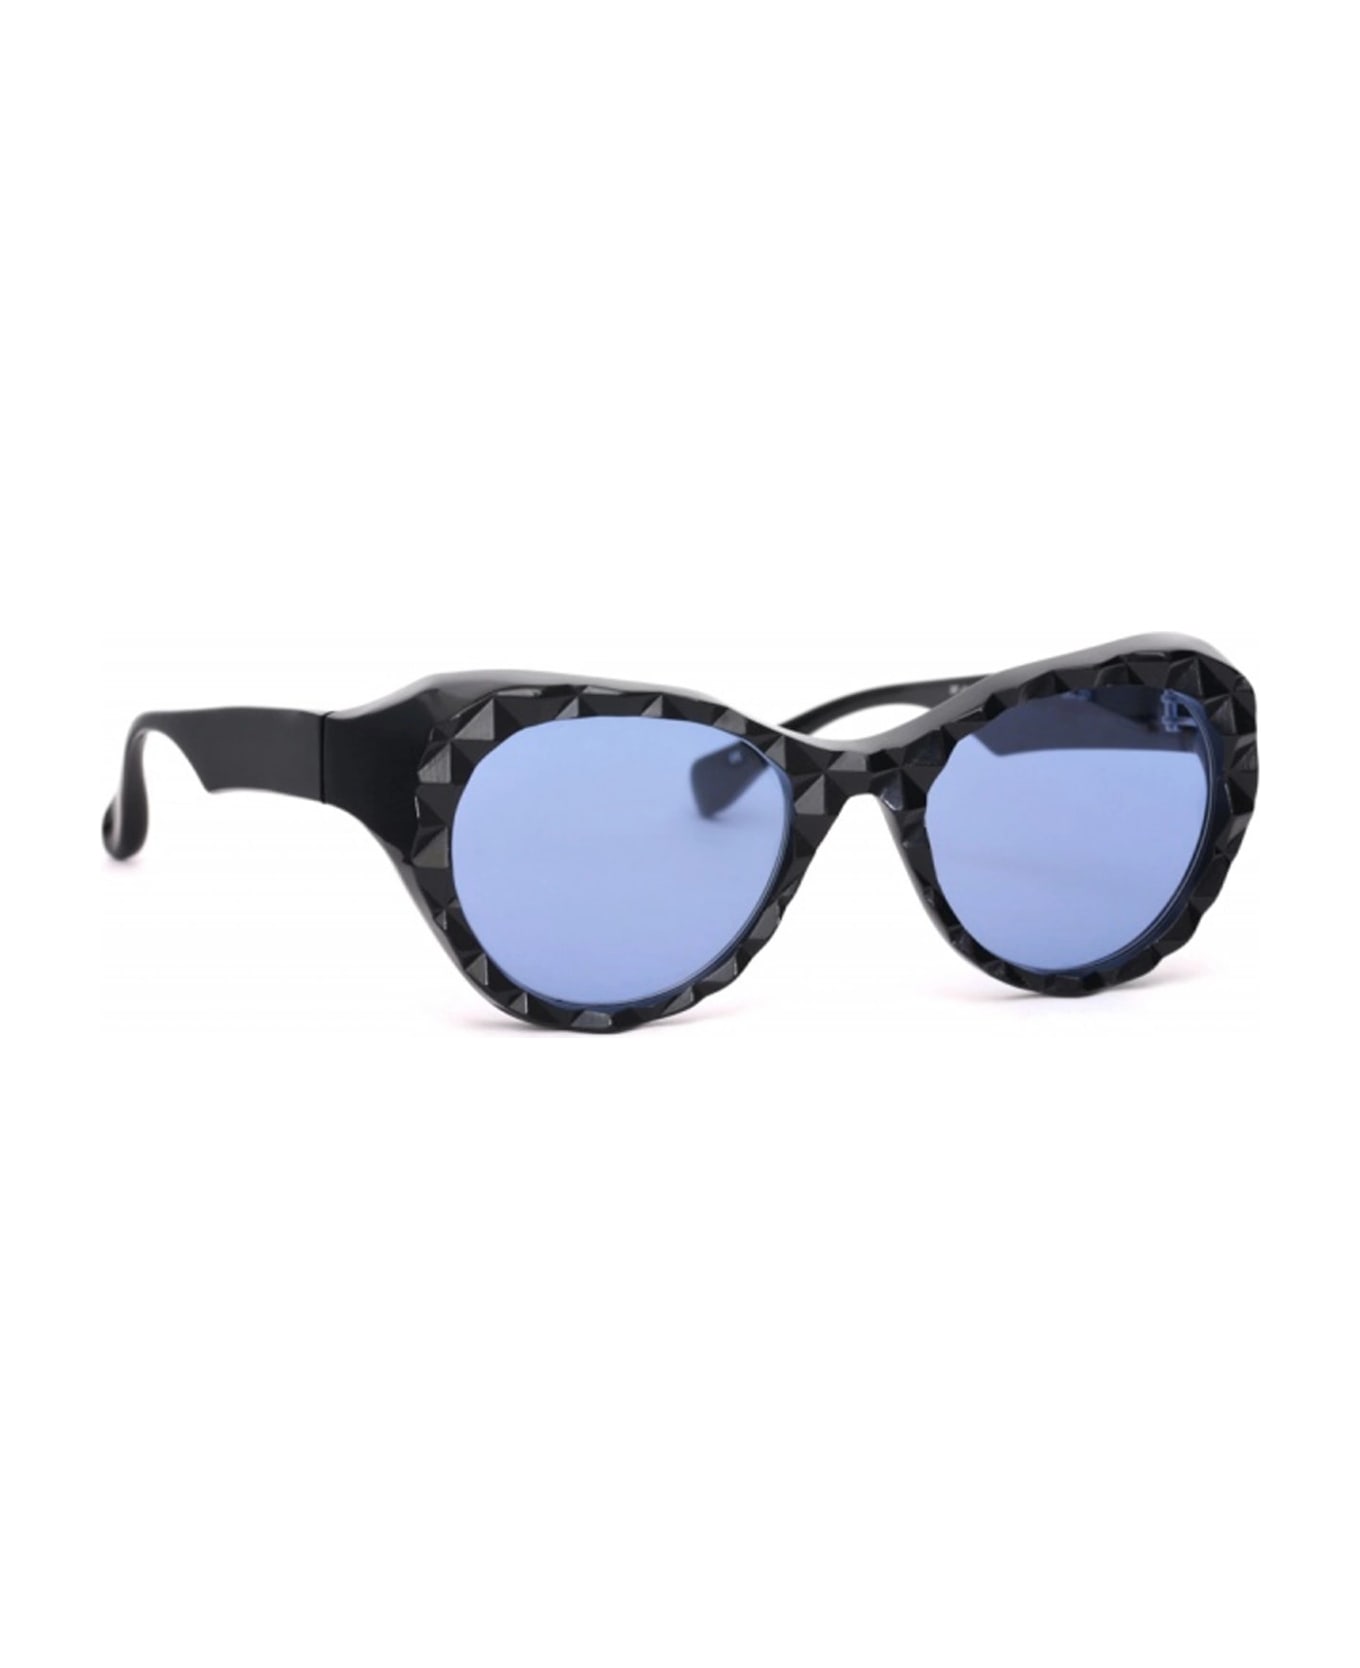 FACTORY900 Rf-063 - Black Wei Sunglasses - Black